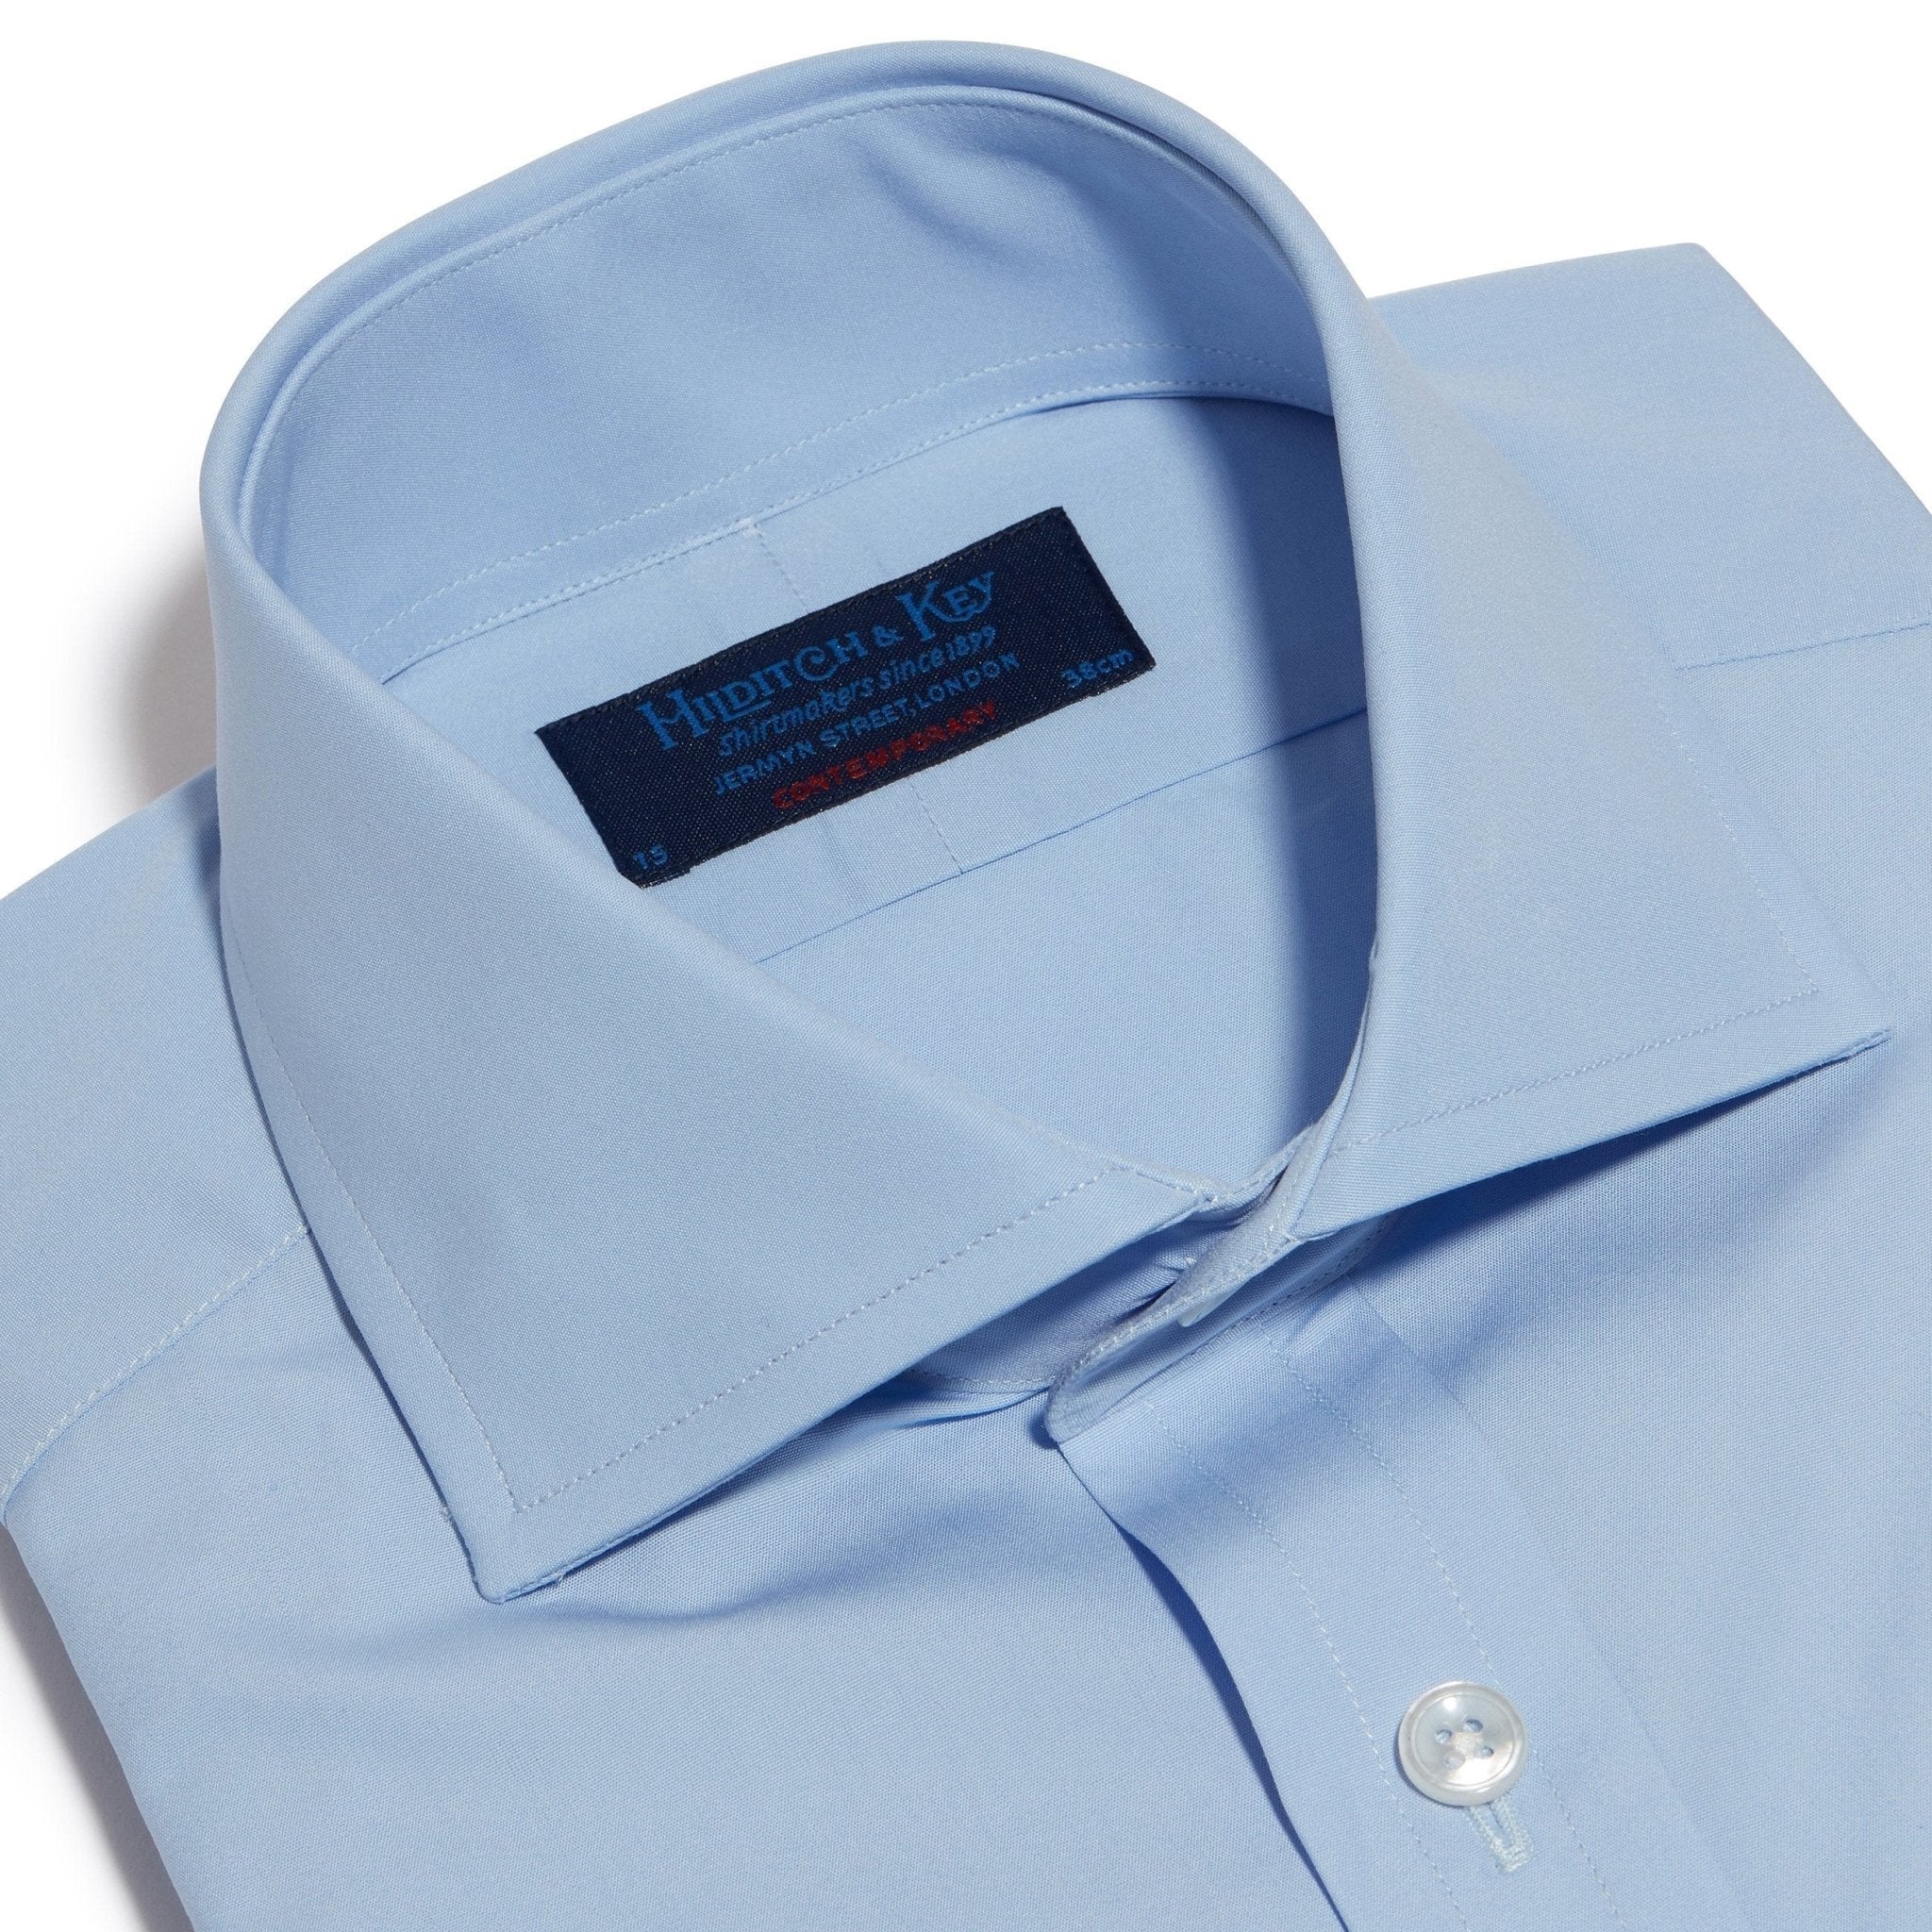 Contemporary Fit, Cut-away Collar, Double Cuff Shirt in a Plain Sky Blue Poplin Cotton - Hilditch & Key